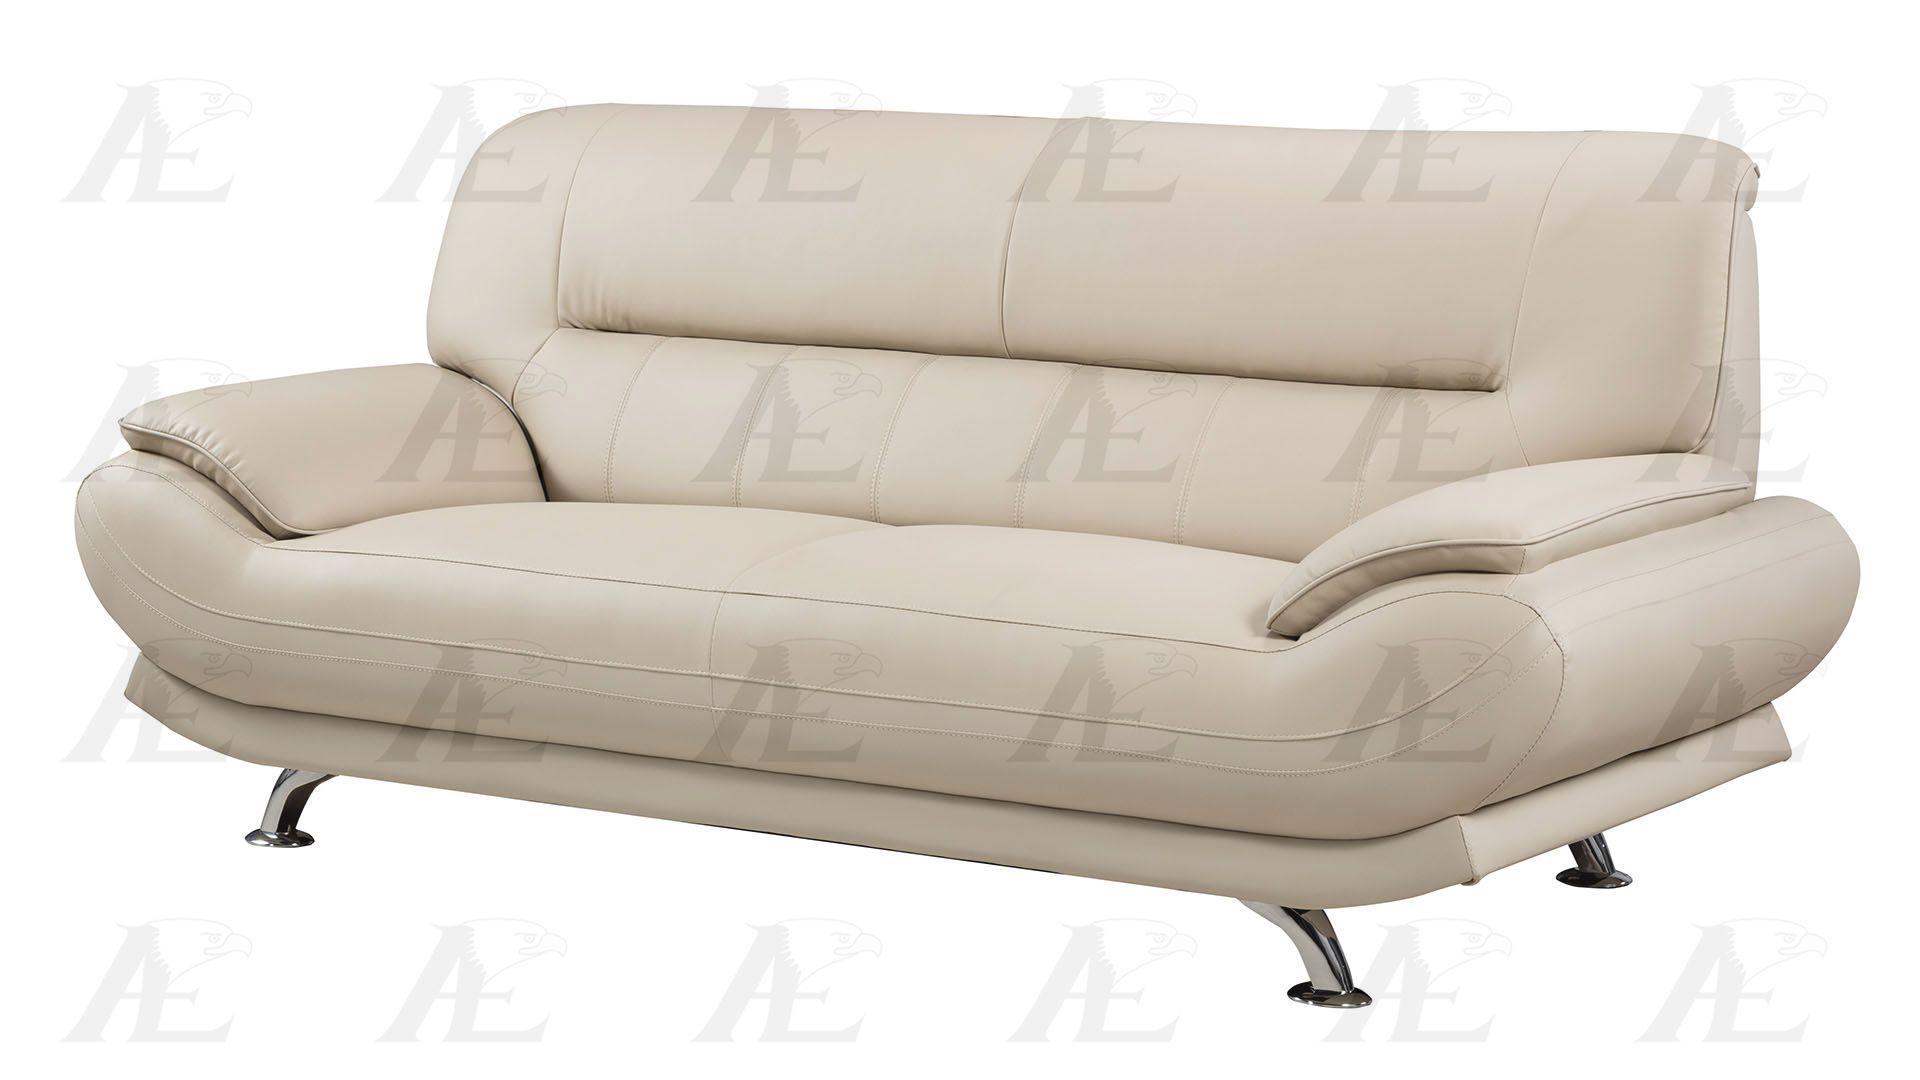 

    
American Eagle Furniture AE-709 Sofa and Loveseat Set Cream AE709-SET-2-CREAM
